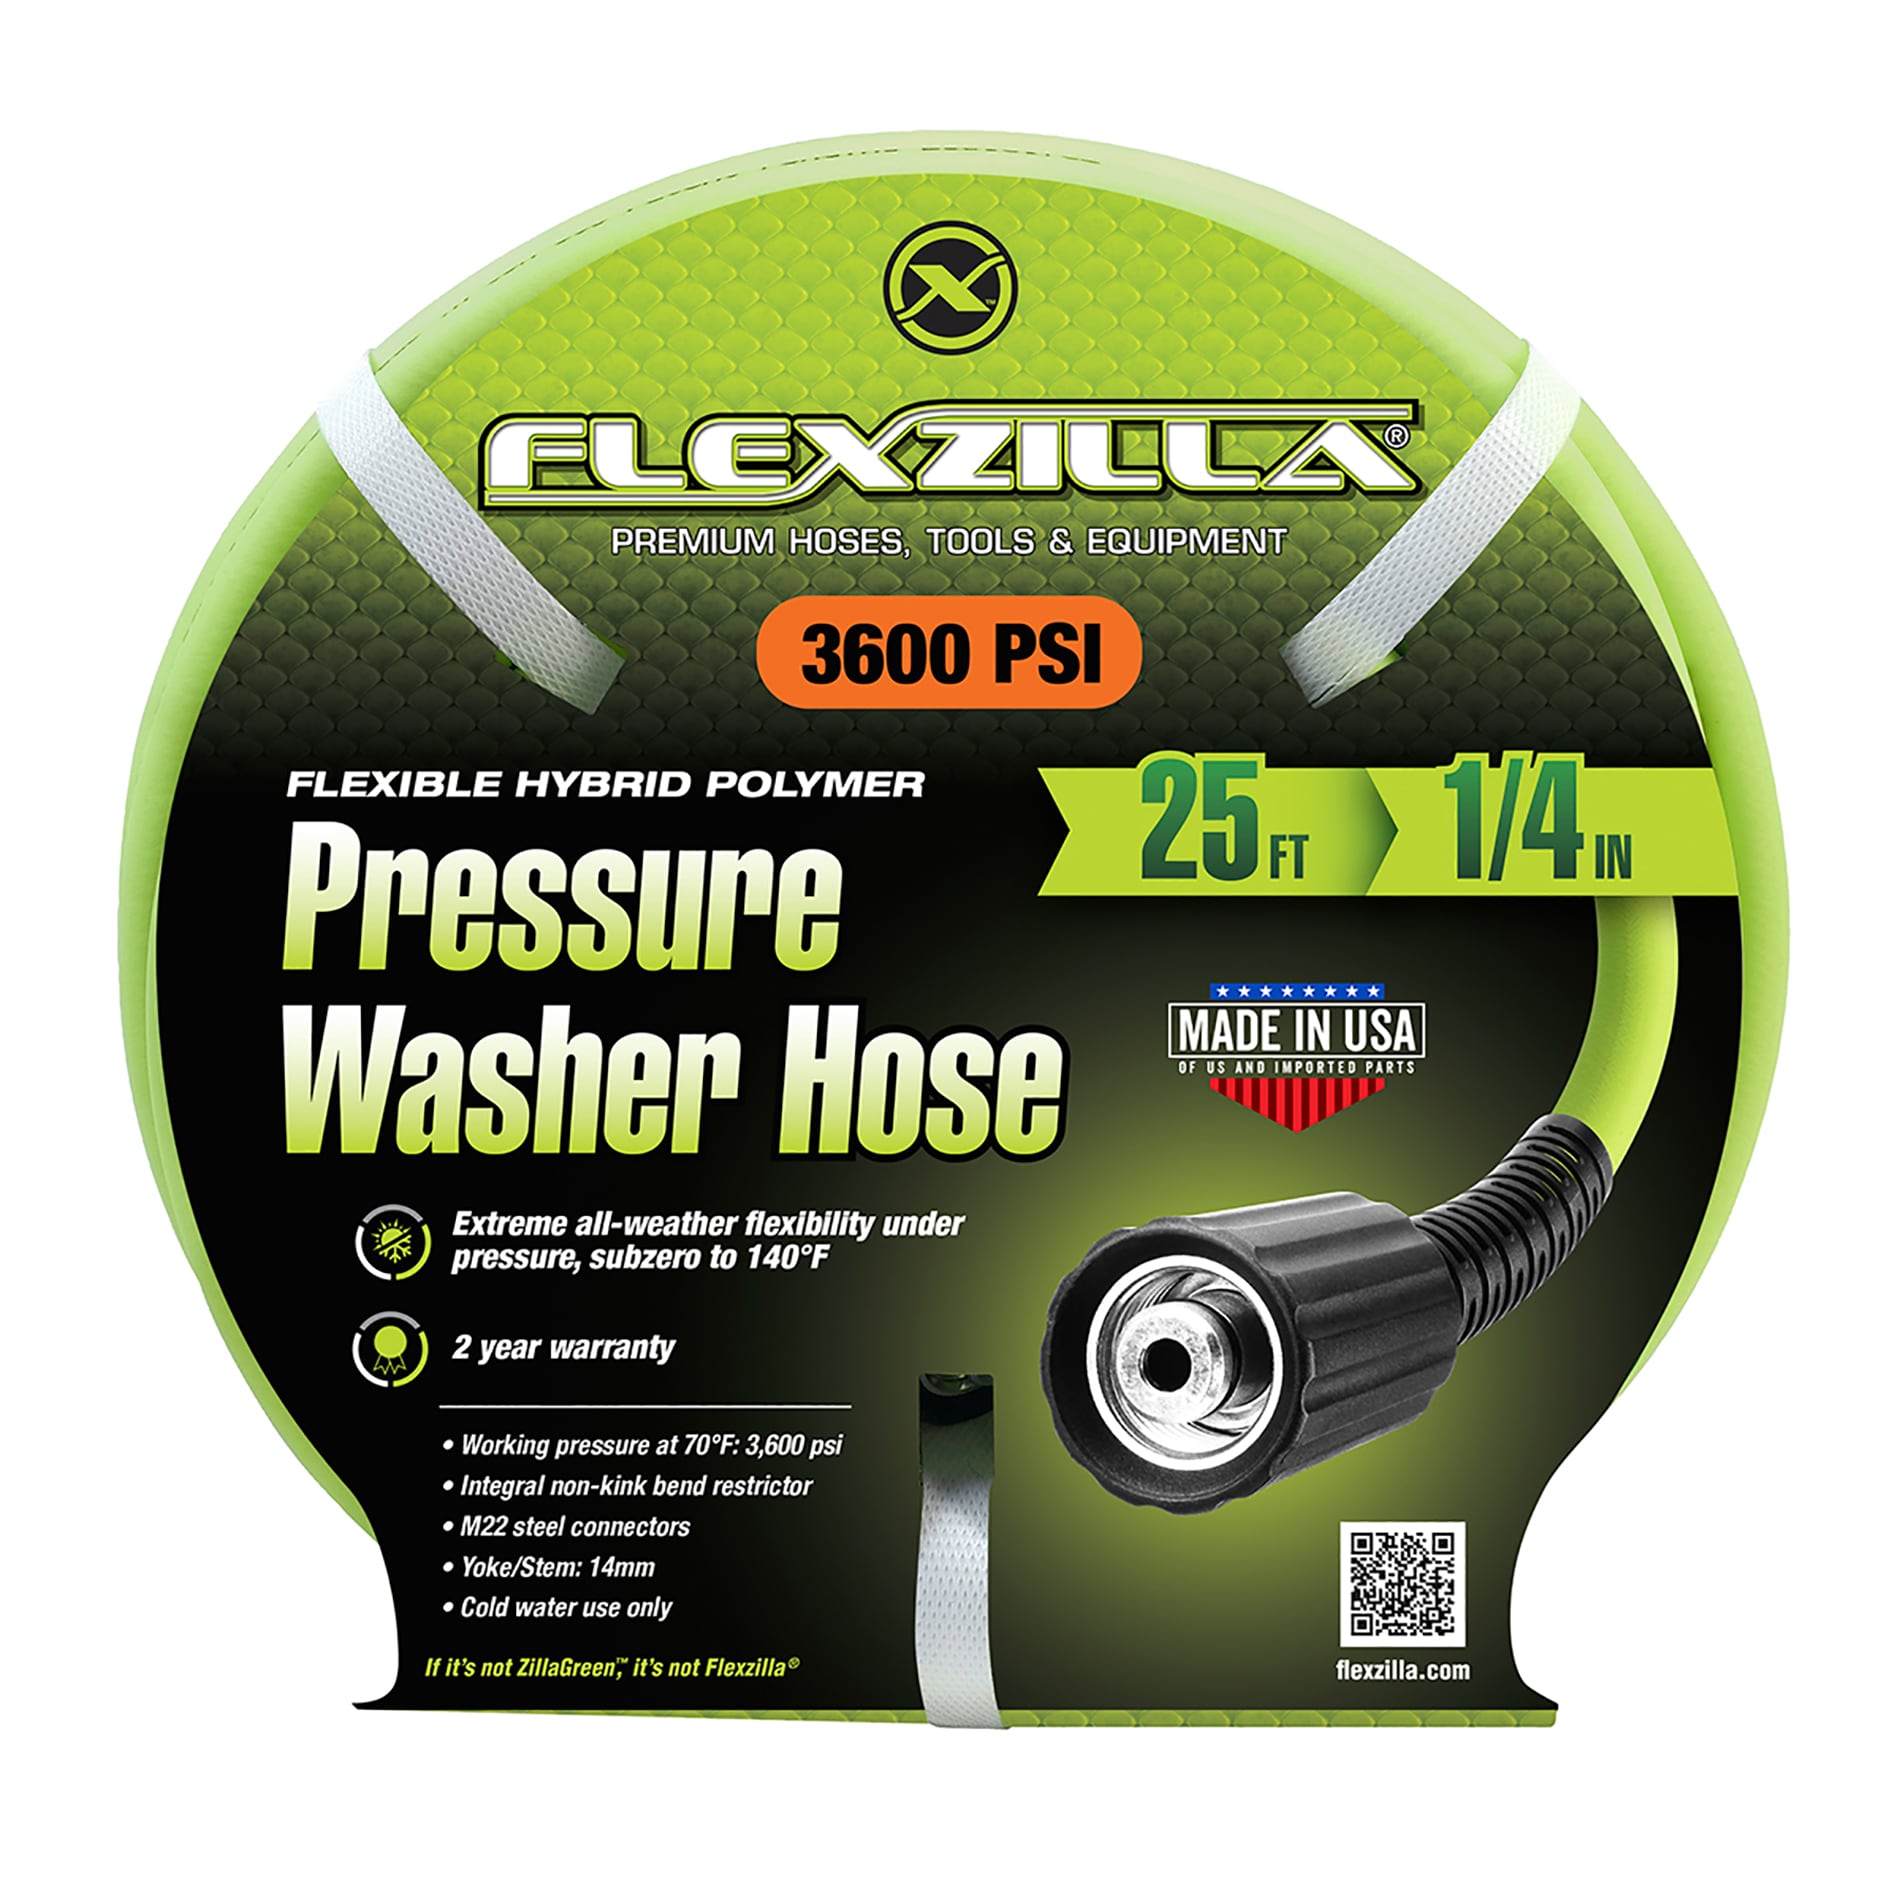 Flexzilla Pressure Washer Hoses at